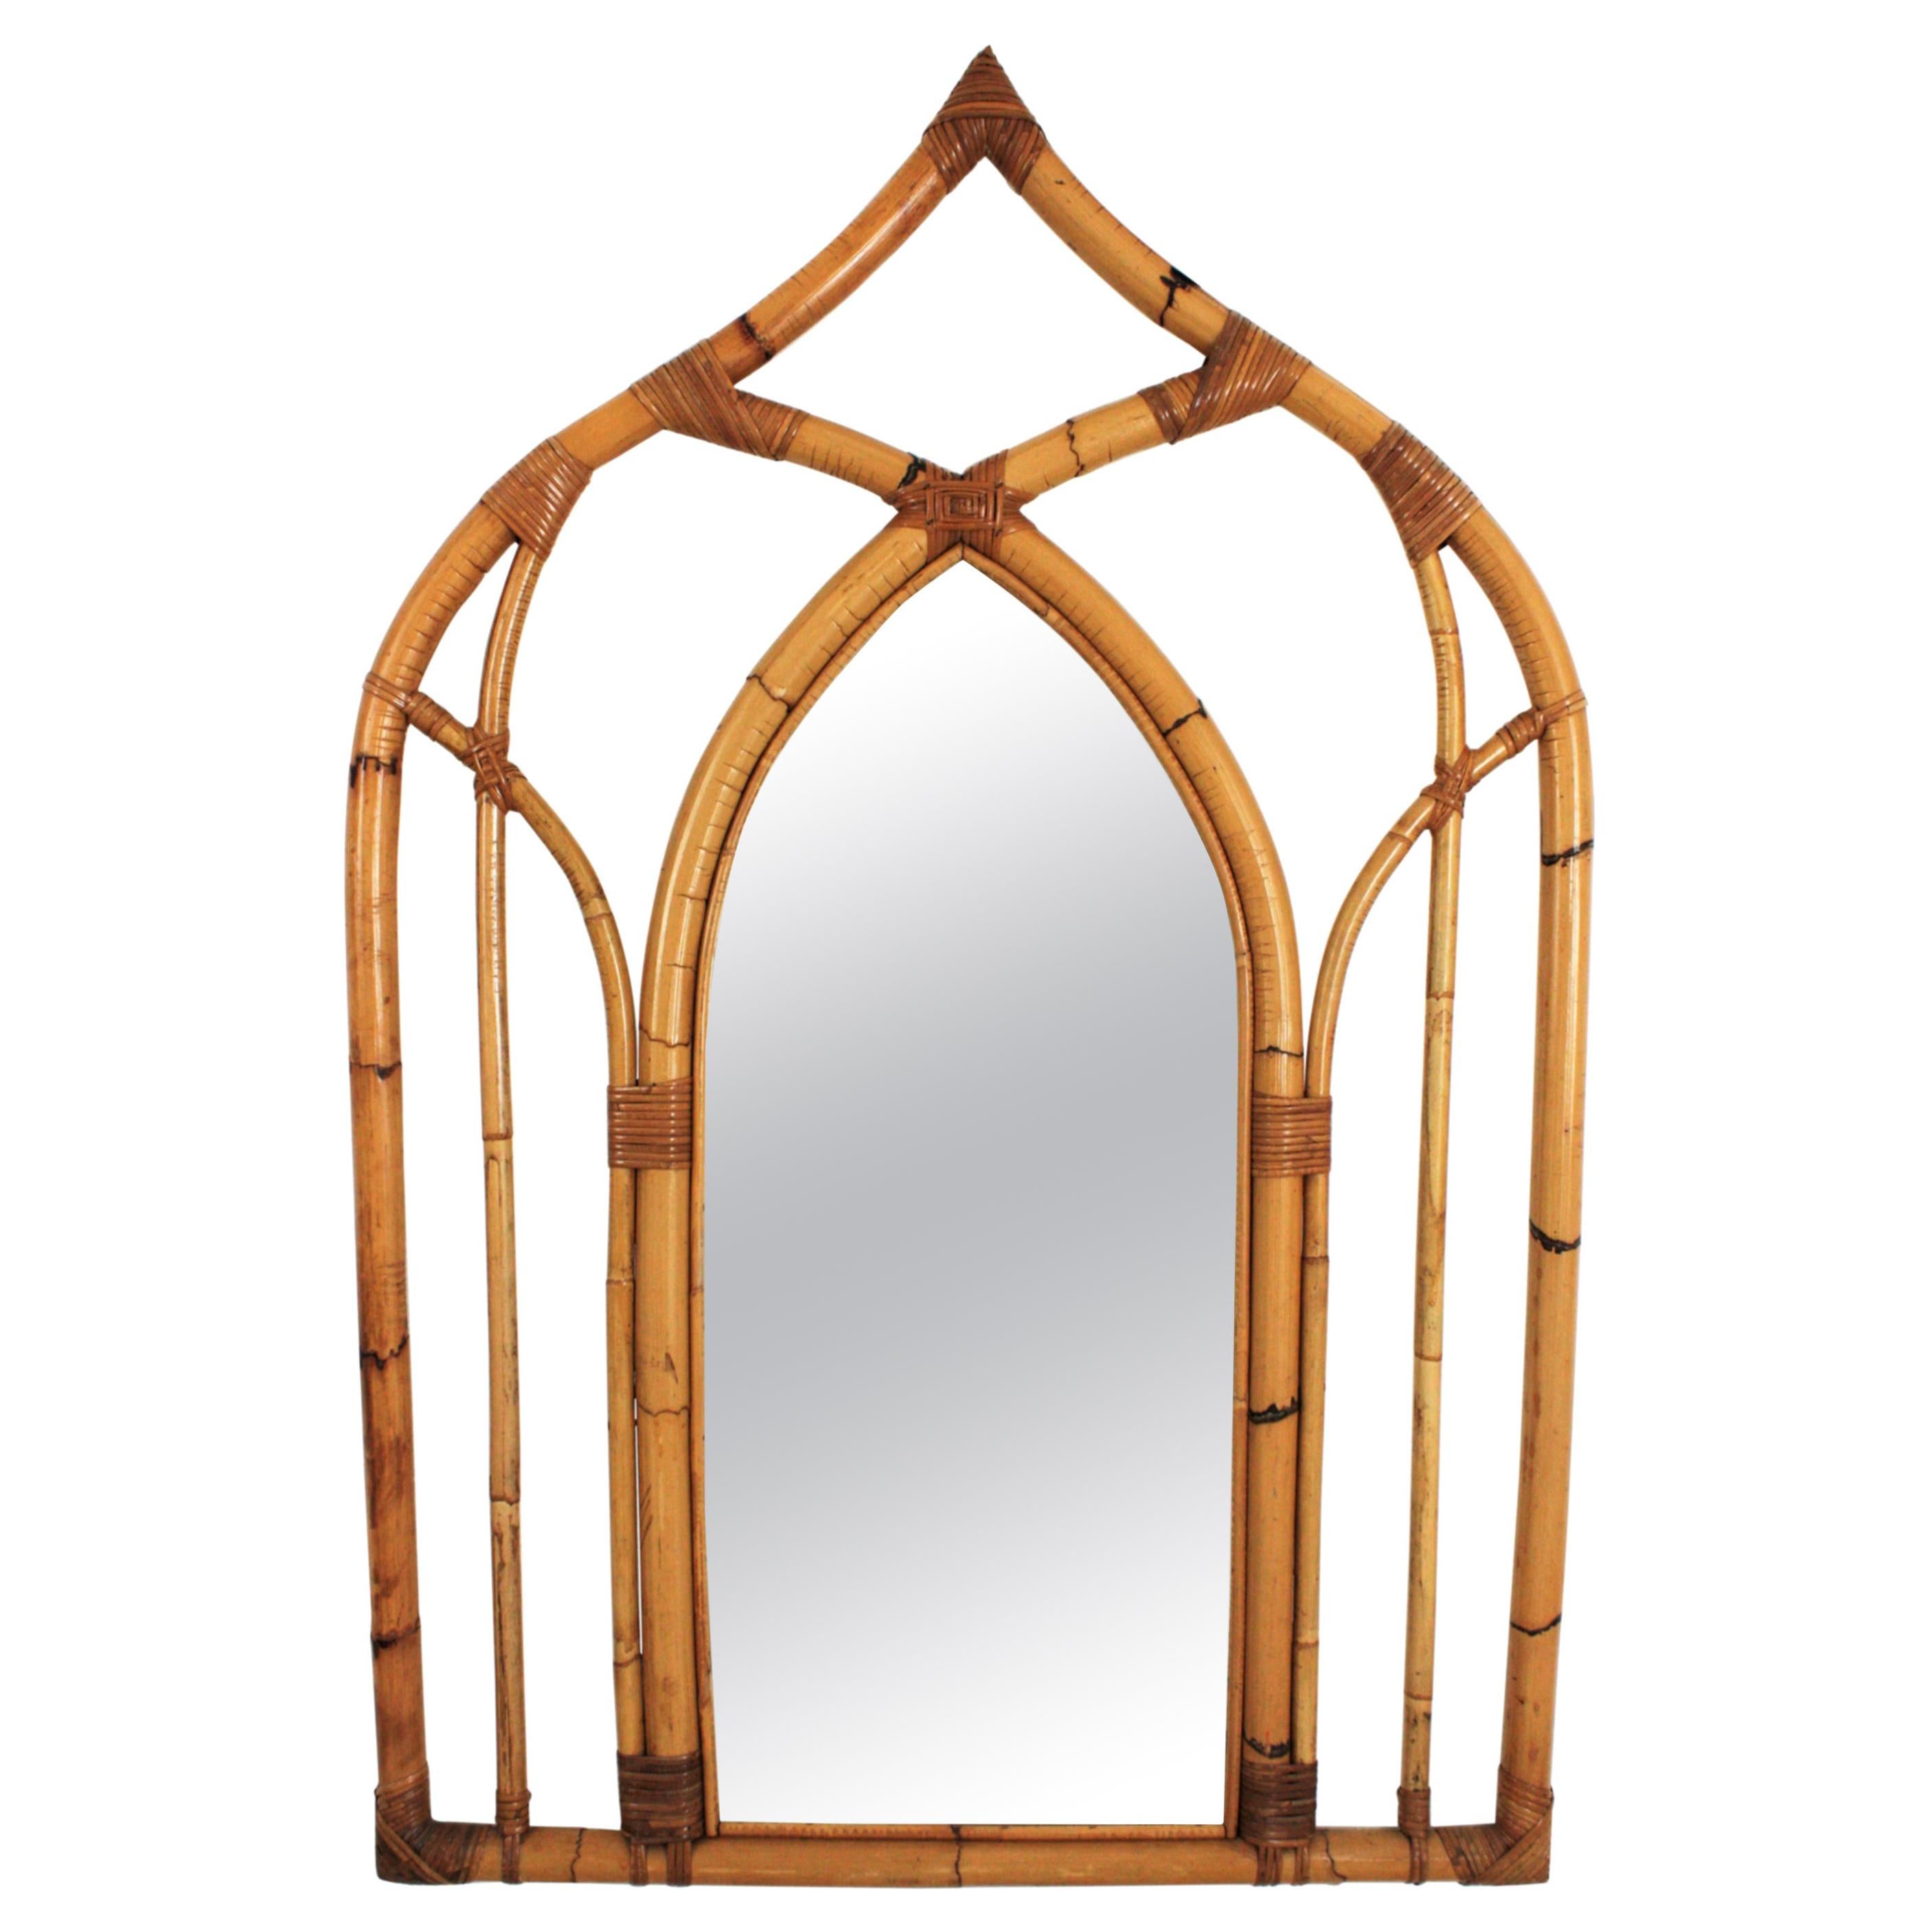 Bamboo Rattan Italian Modernist Arabic Inspired Wall Mirror